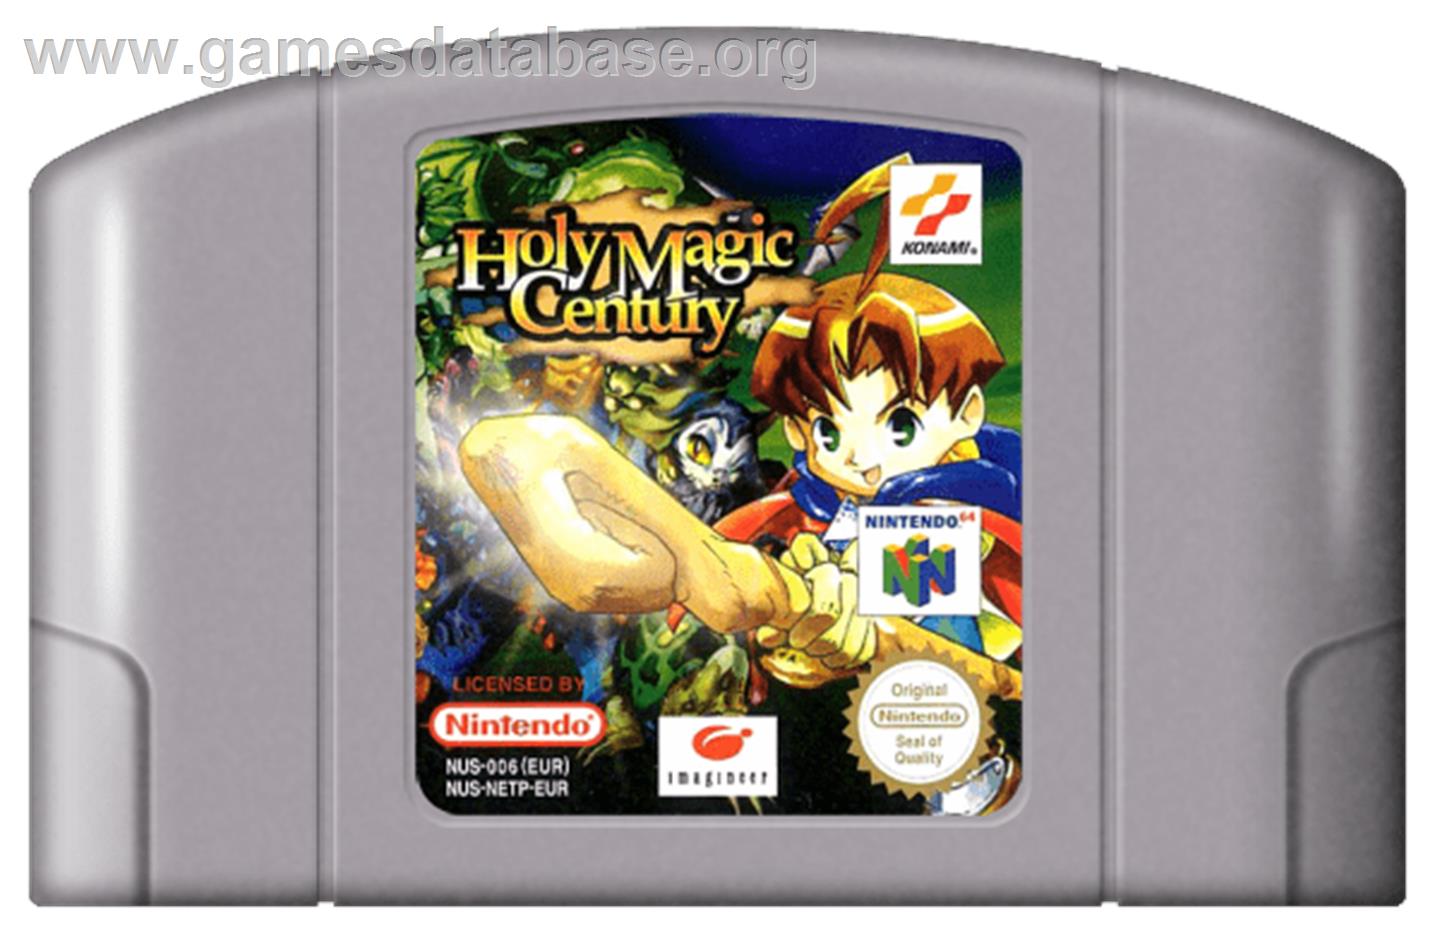 Holy Magic Century - Nintendo N64 - Artwork - Cartridge